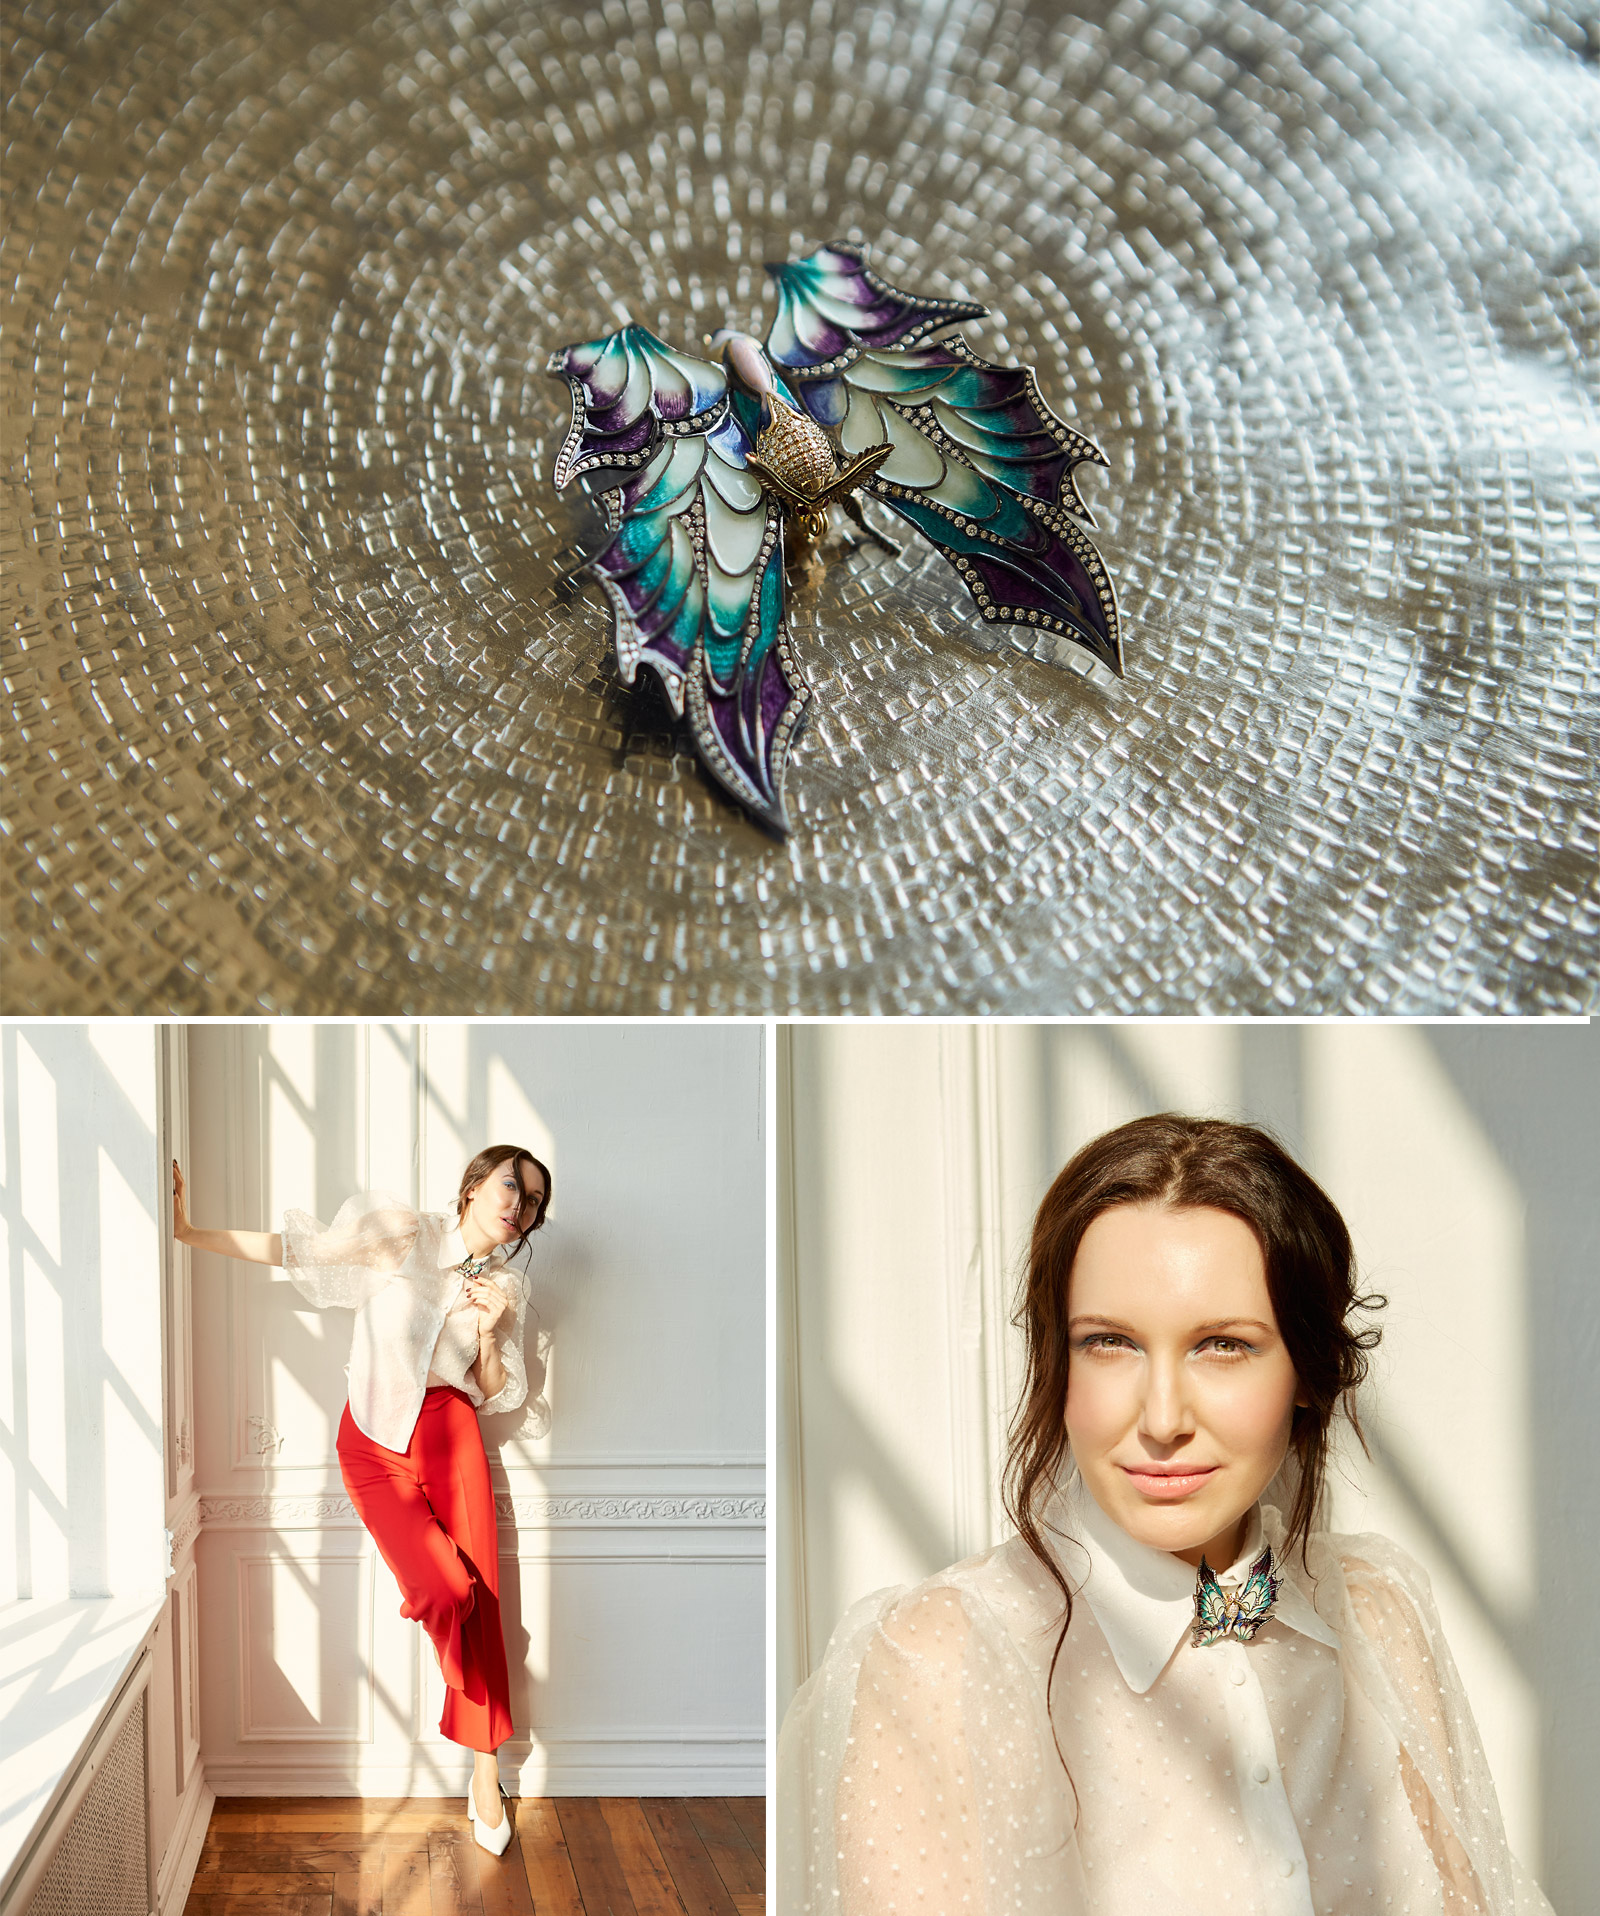 Katerina Perez wearing butterfly brooch with enamel and diamonds by Ekaterina Kostrigina